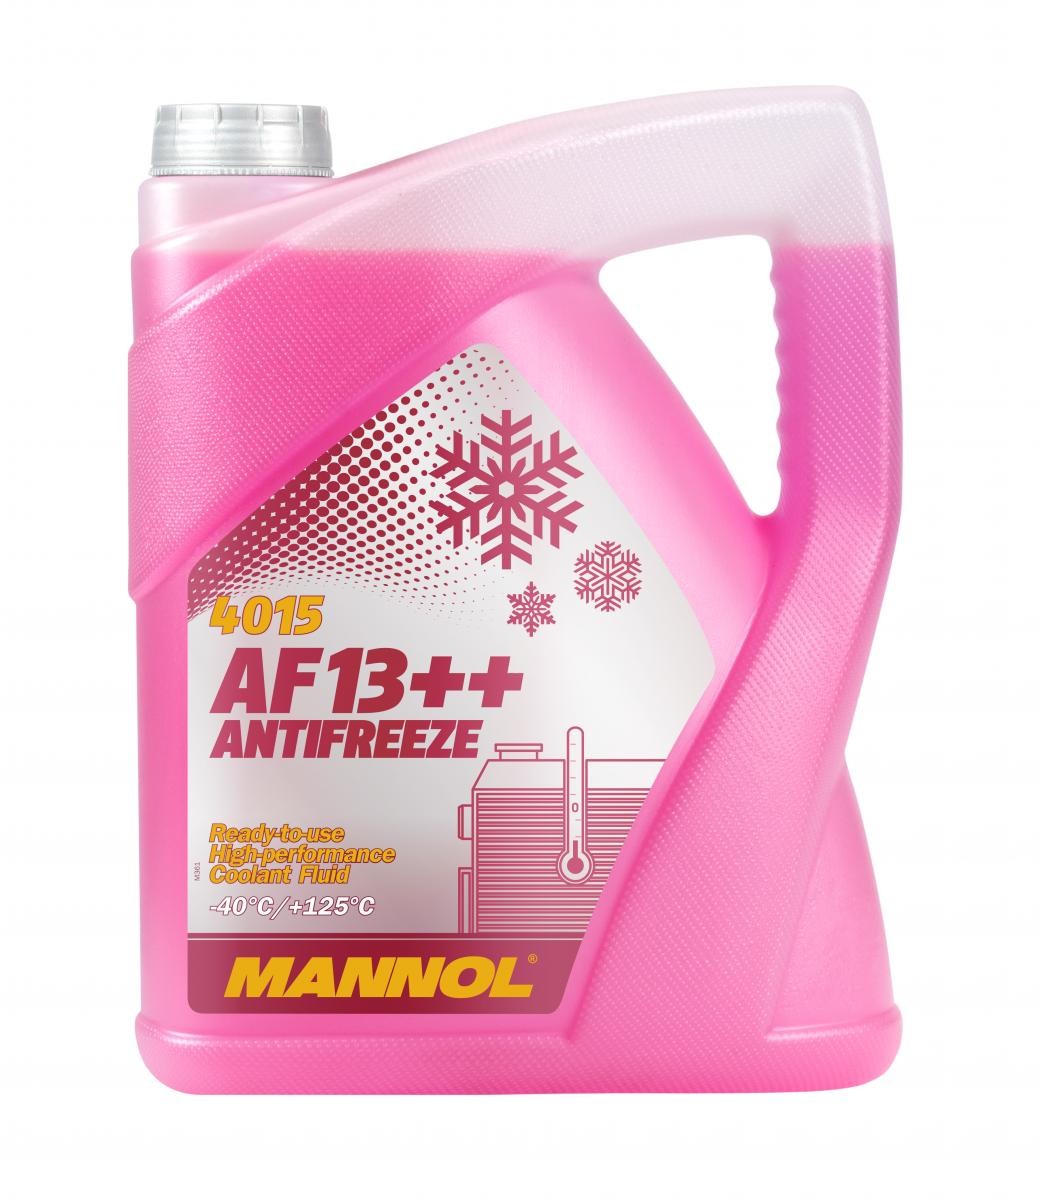 Kupi MN4015-5 MANNOL AF13++, High-performance G12 Rdeca, 5l G12, temperataturno podrocje: -40, +125°C Sredstvo proti zmrzovanju hladilne vode (antifriz) MN4015-5 poceni